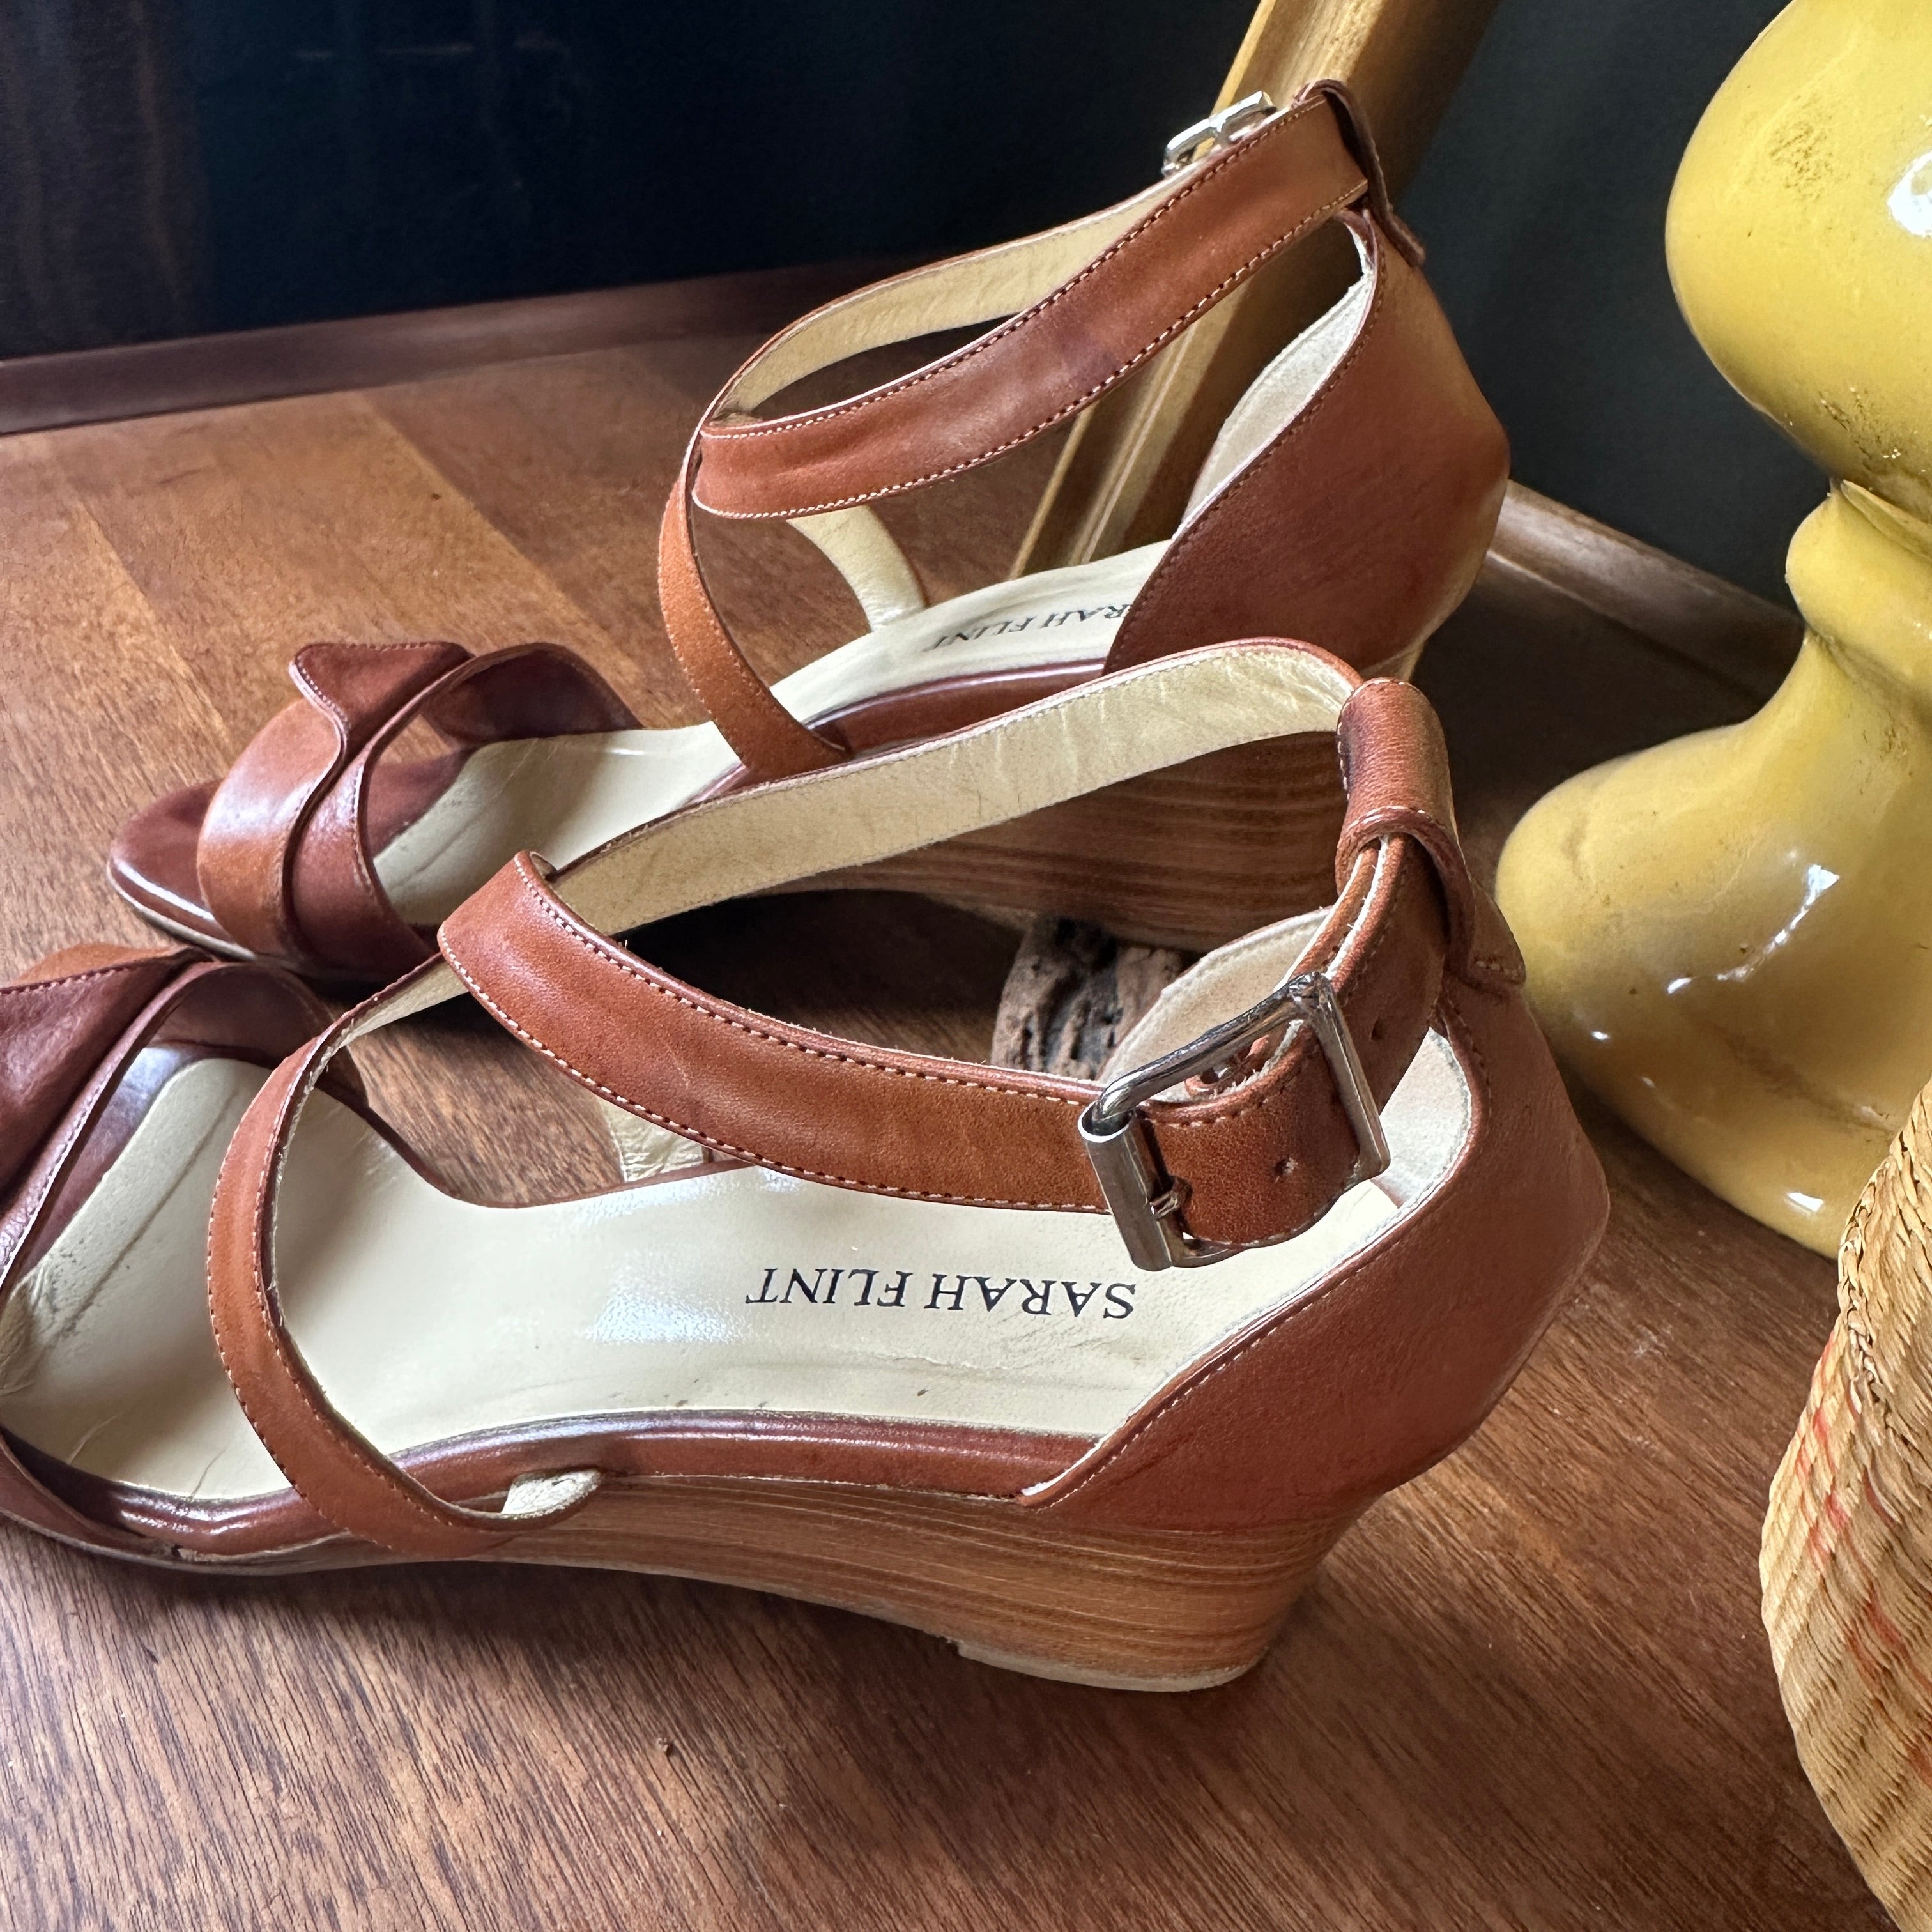 Brown/Tan Leather “Sarah Flint” Wedge Sandals